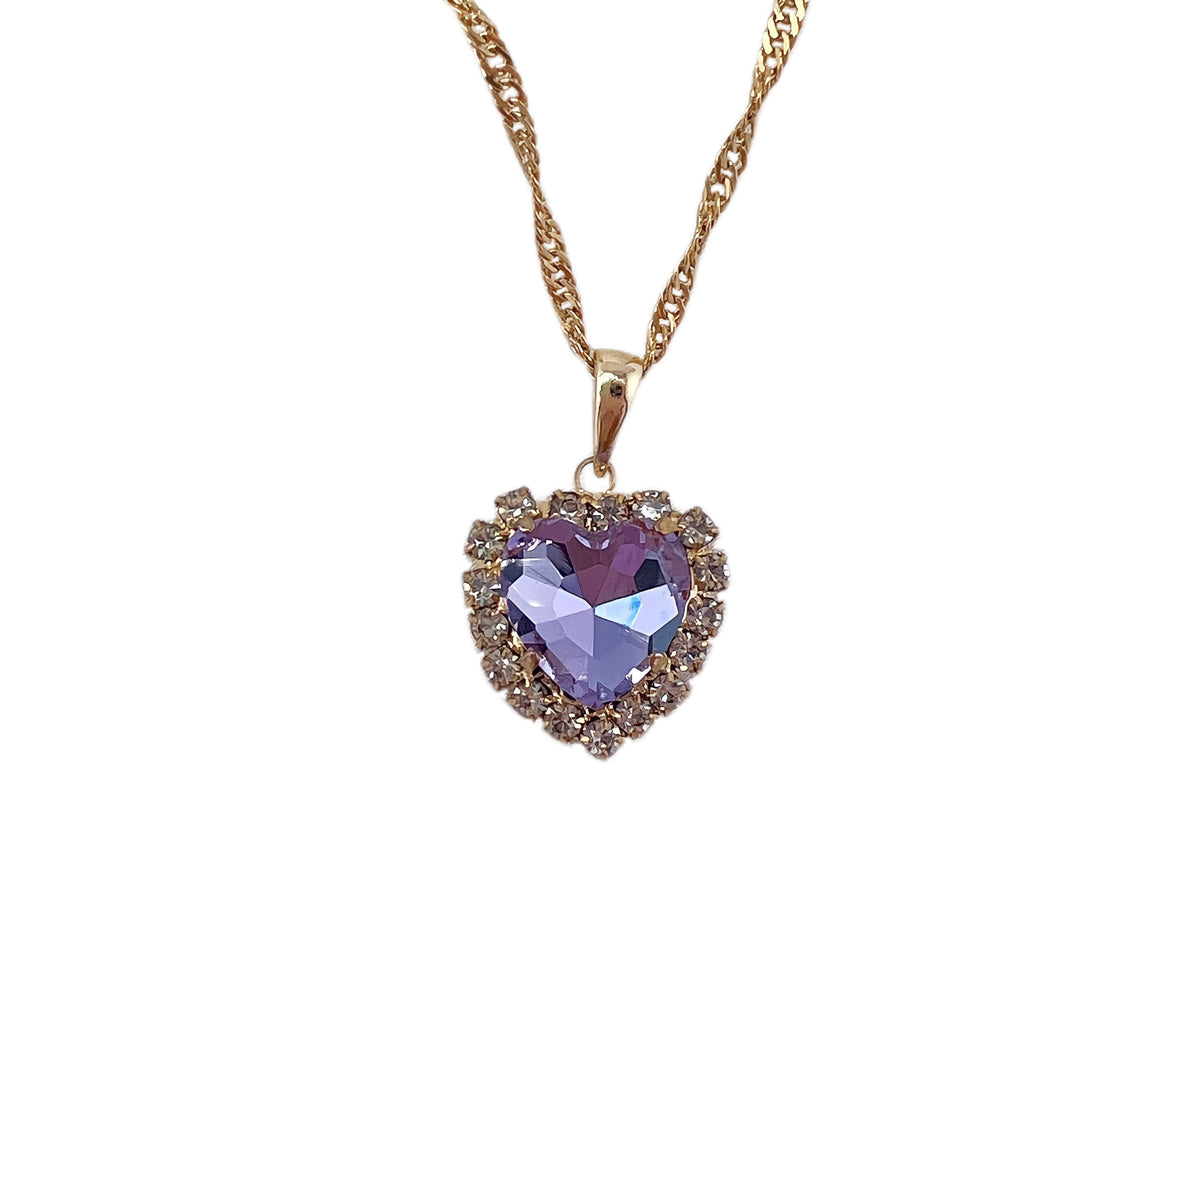 Lavender Dream Necklace